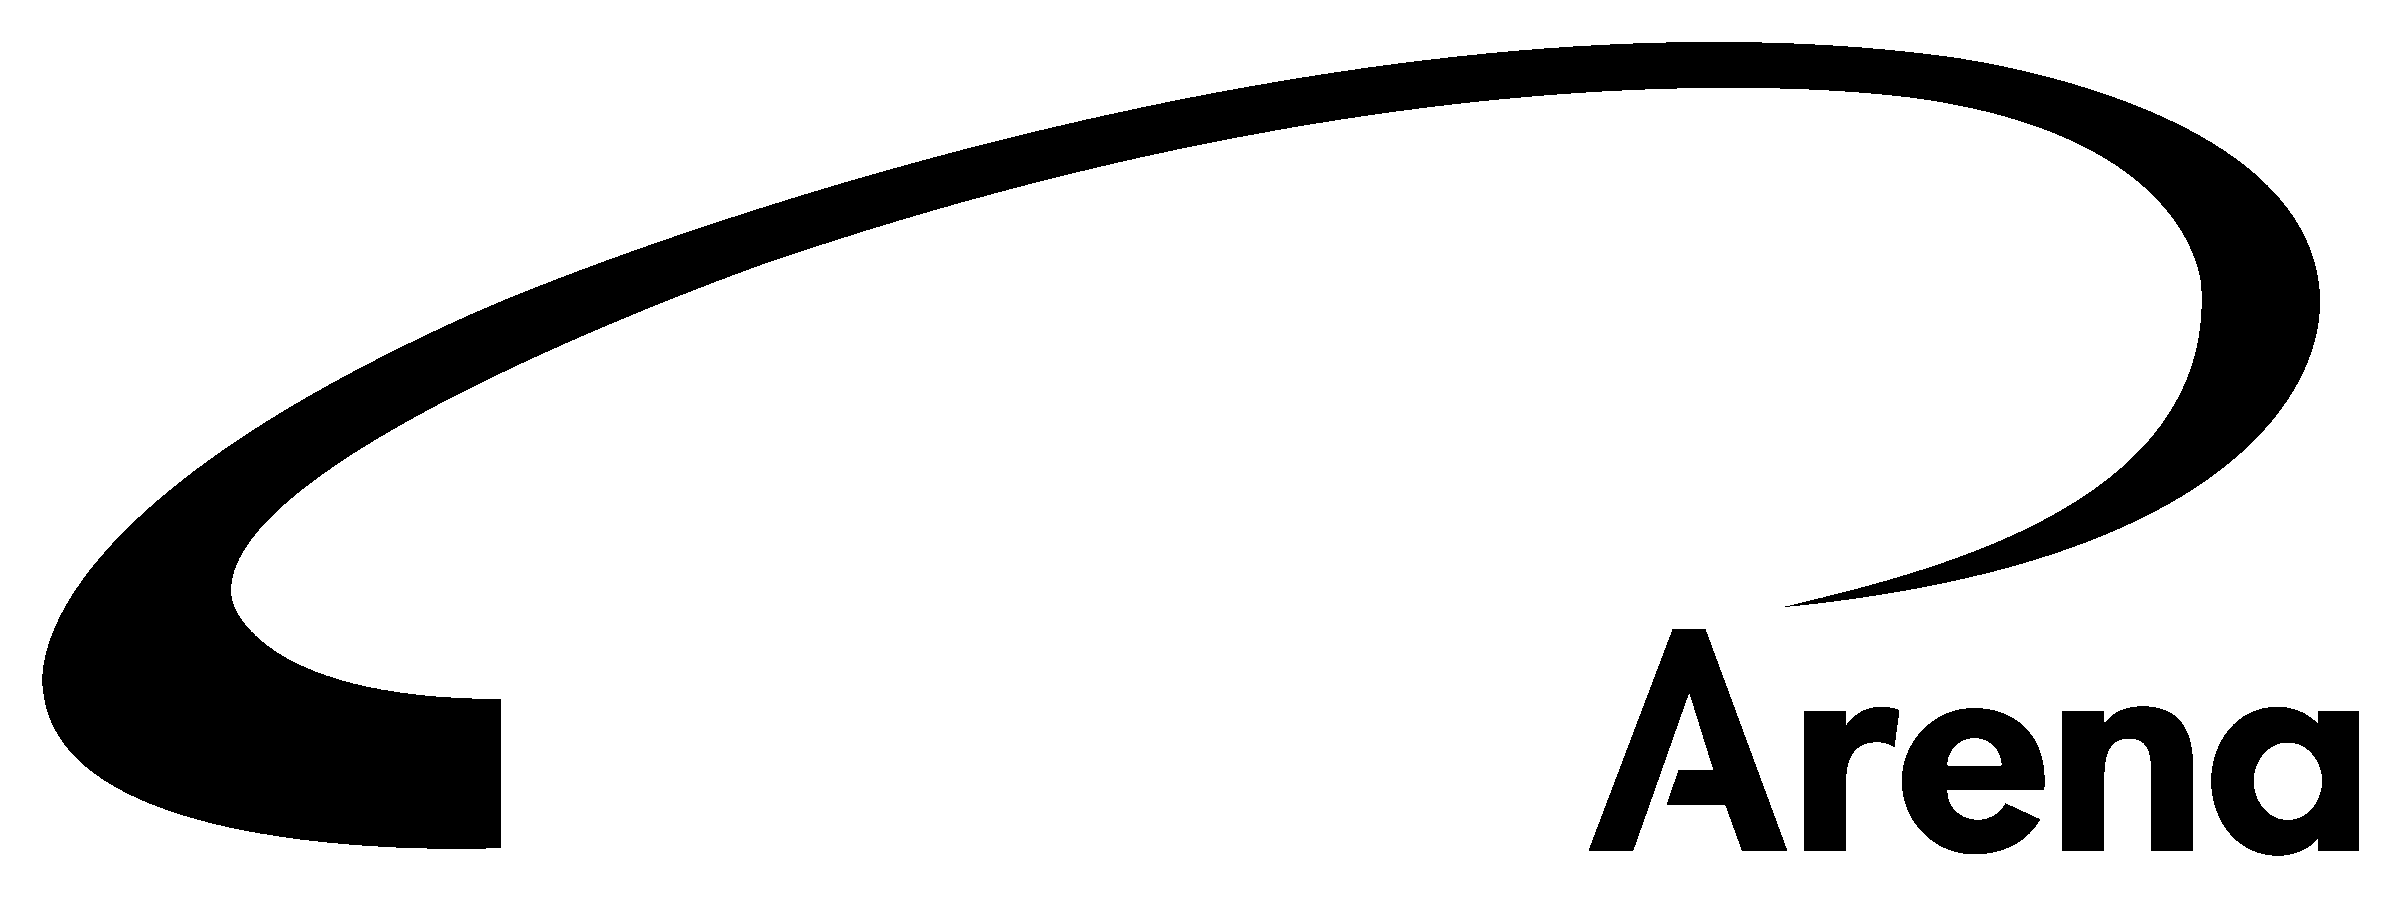 Red Bull Arena Logo - Red Bull Arena Logo PNG Transparent & SVG Vector